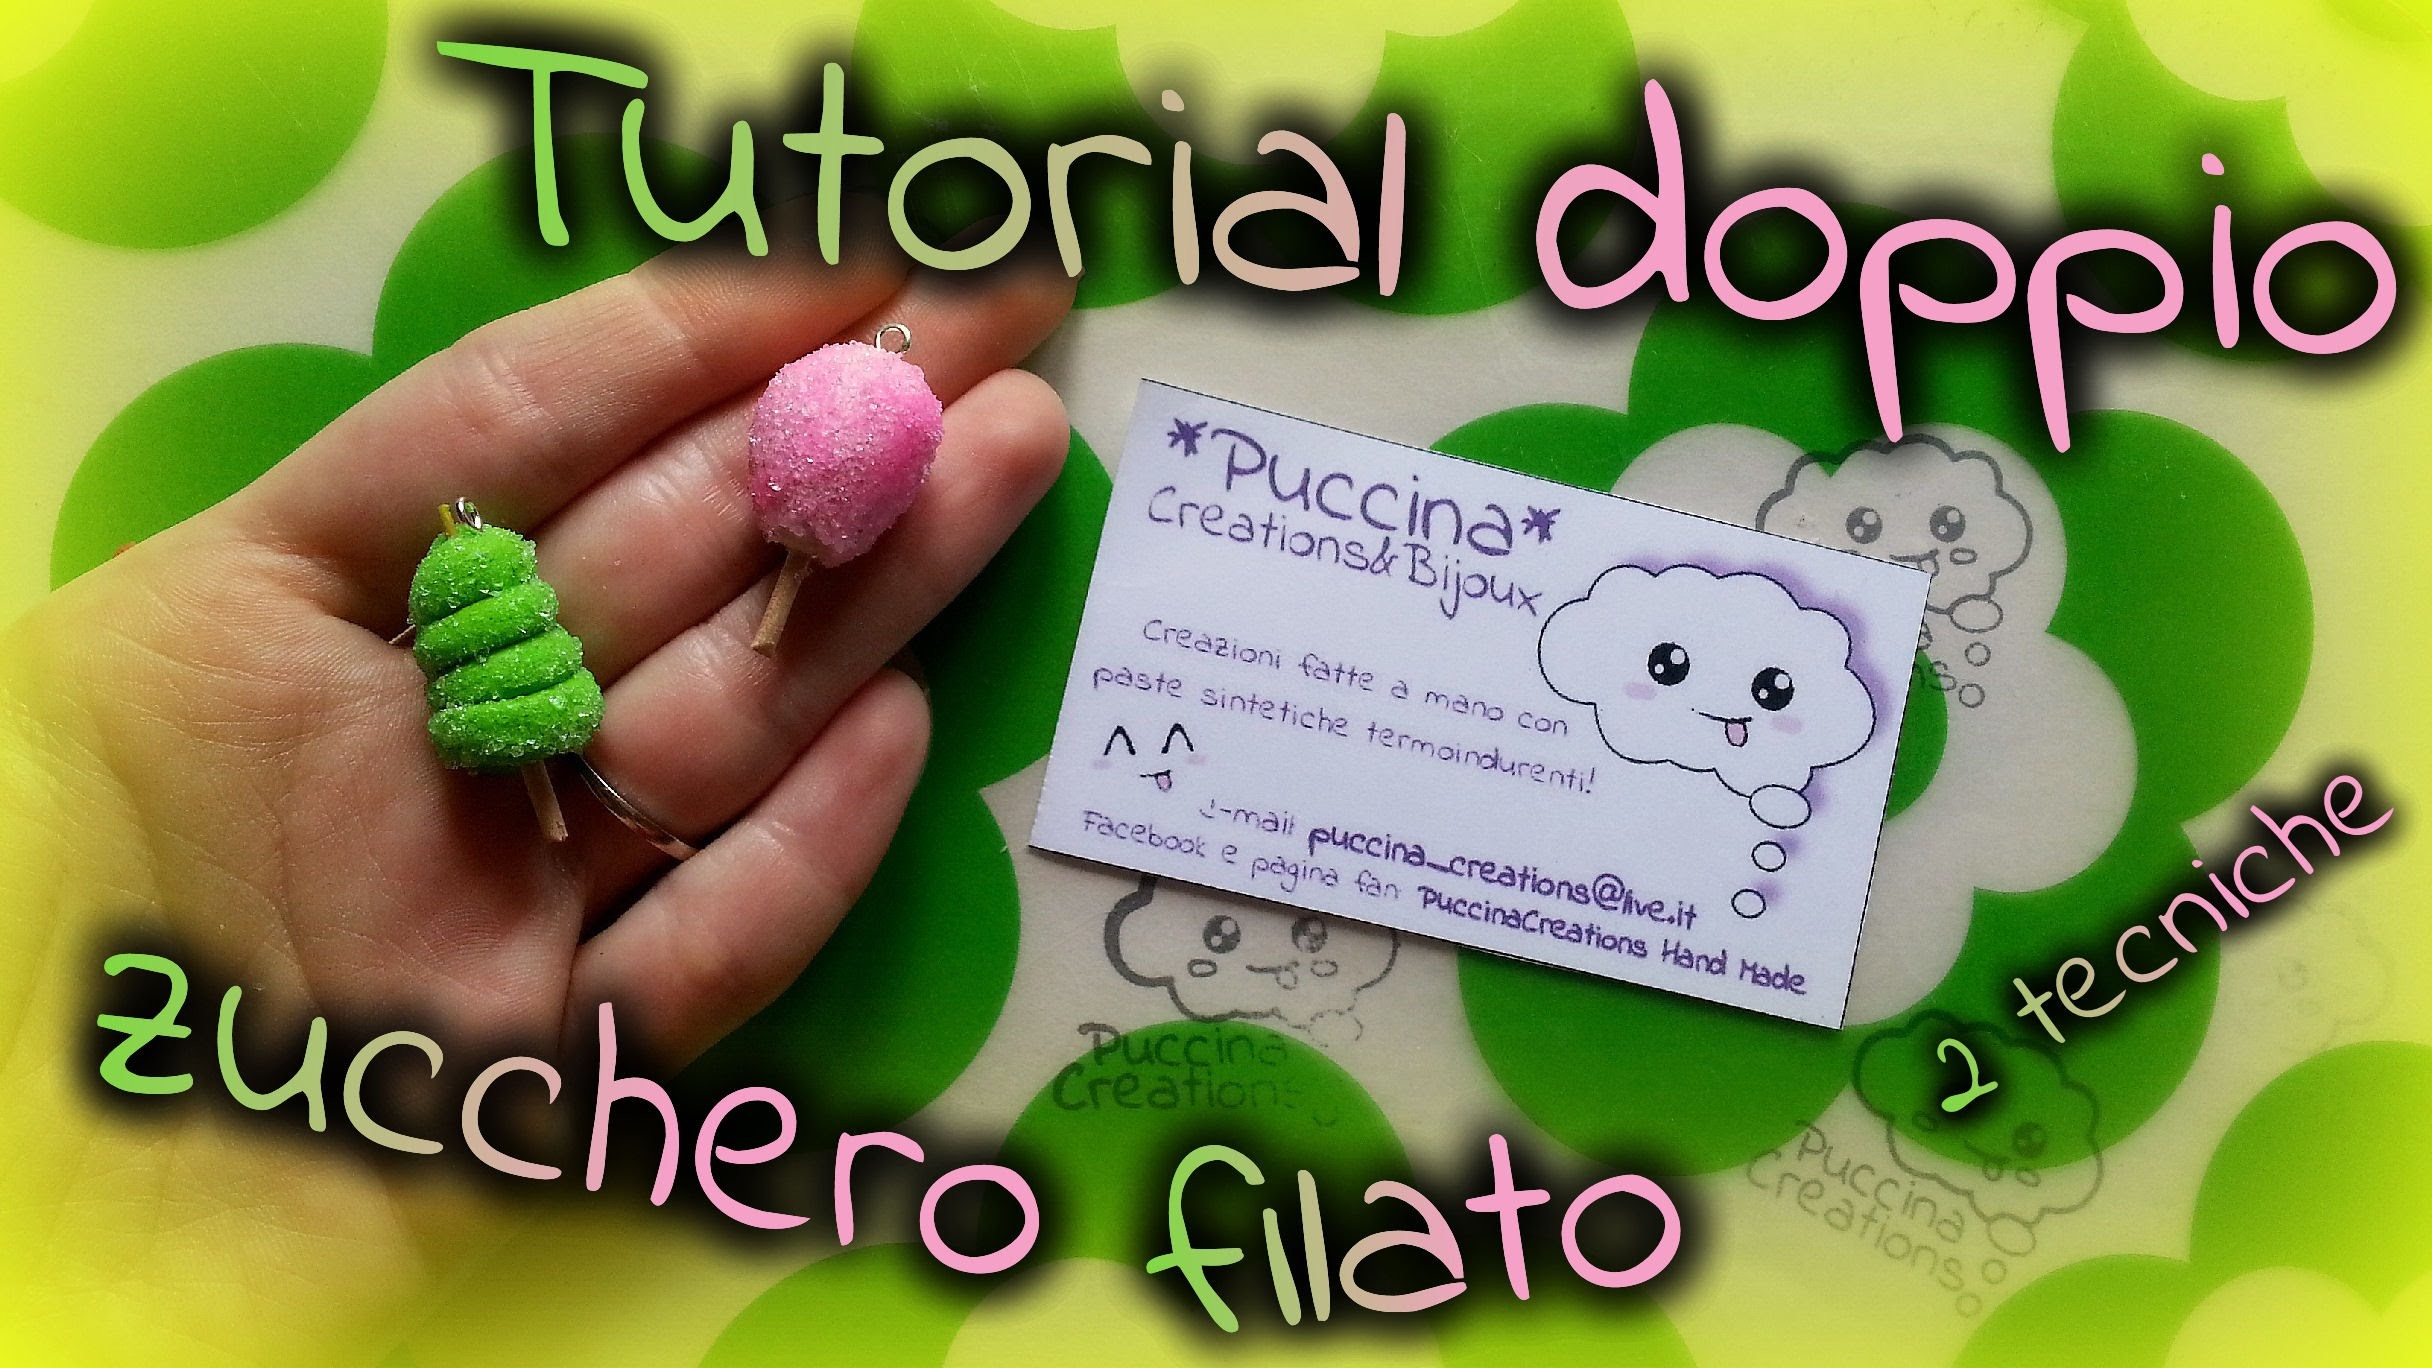 DIY Tutorial Cotton Candy - zucchero filato (Fimo.Polymer Clay) | PuccinaCreations